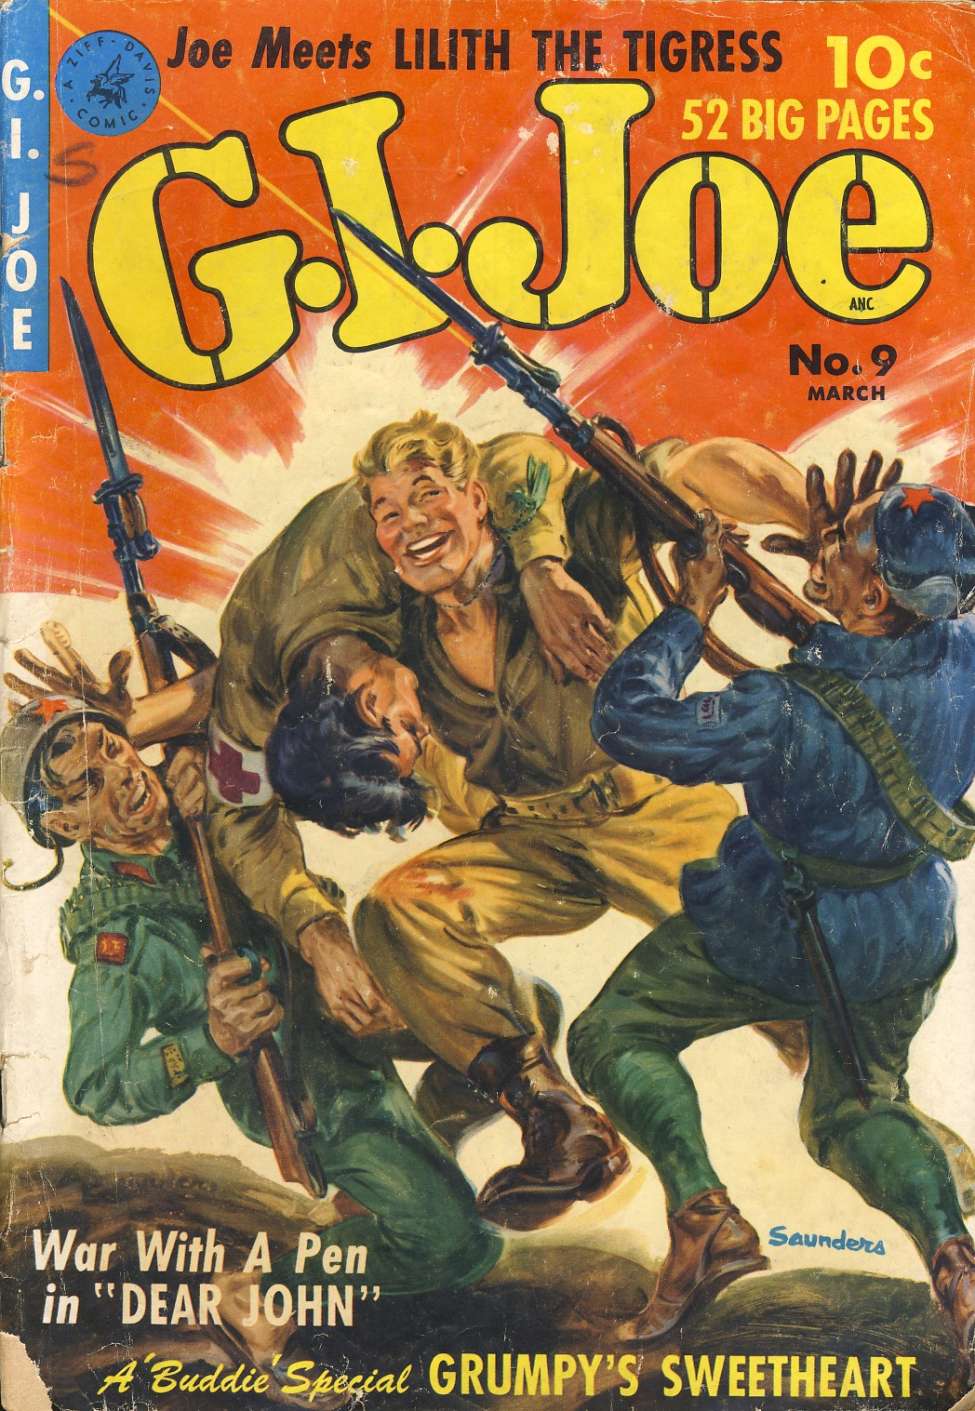 Comic Book Cover For G.I. Joe 9